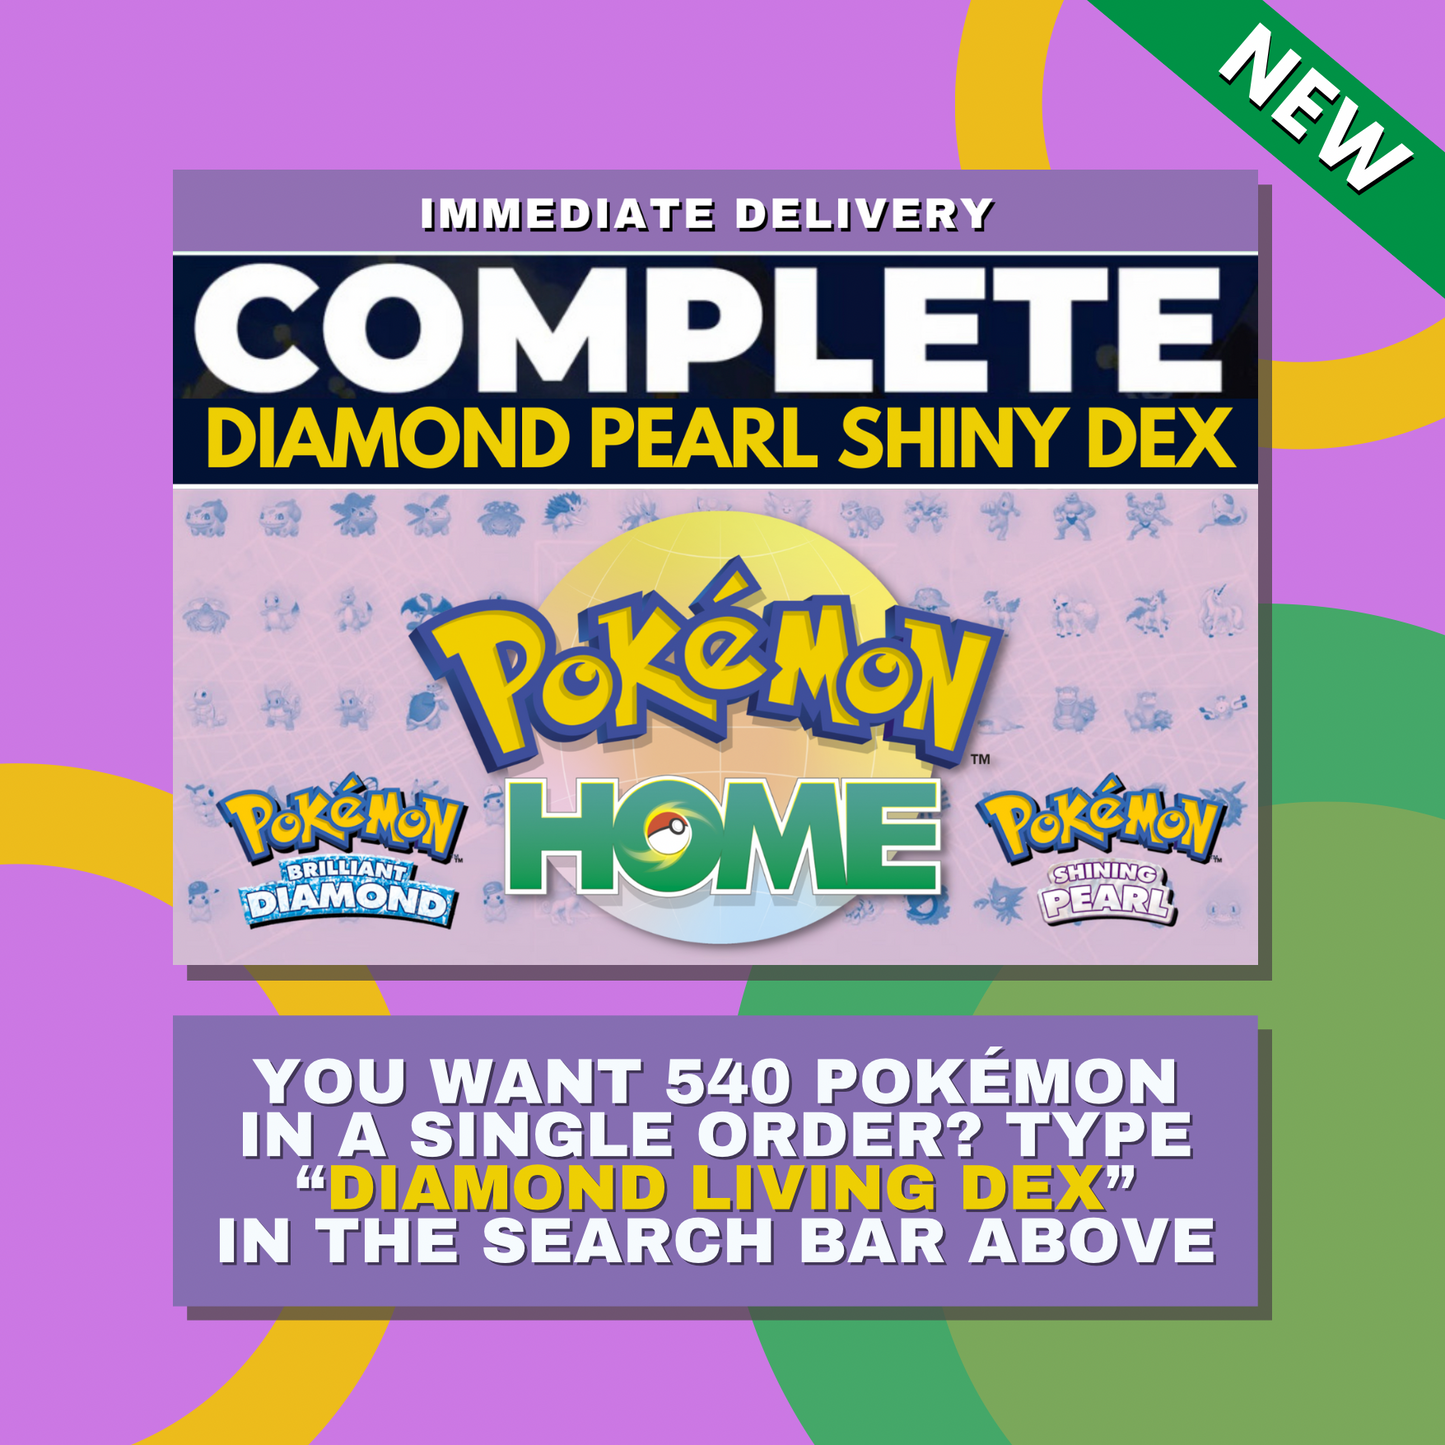 Latias Shiny ✨ or Non Shiny Pokémon Brilliant Diamond Shining Pearl Battle Ready 6 IV Competitive 100%  Legit Level 100 Customizable Custom OT